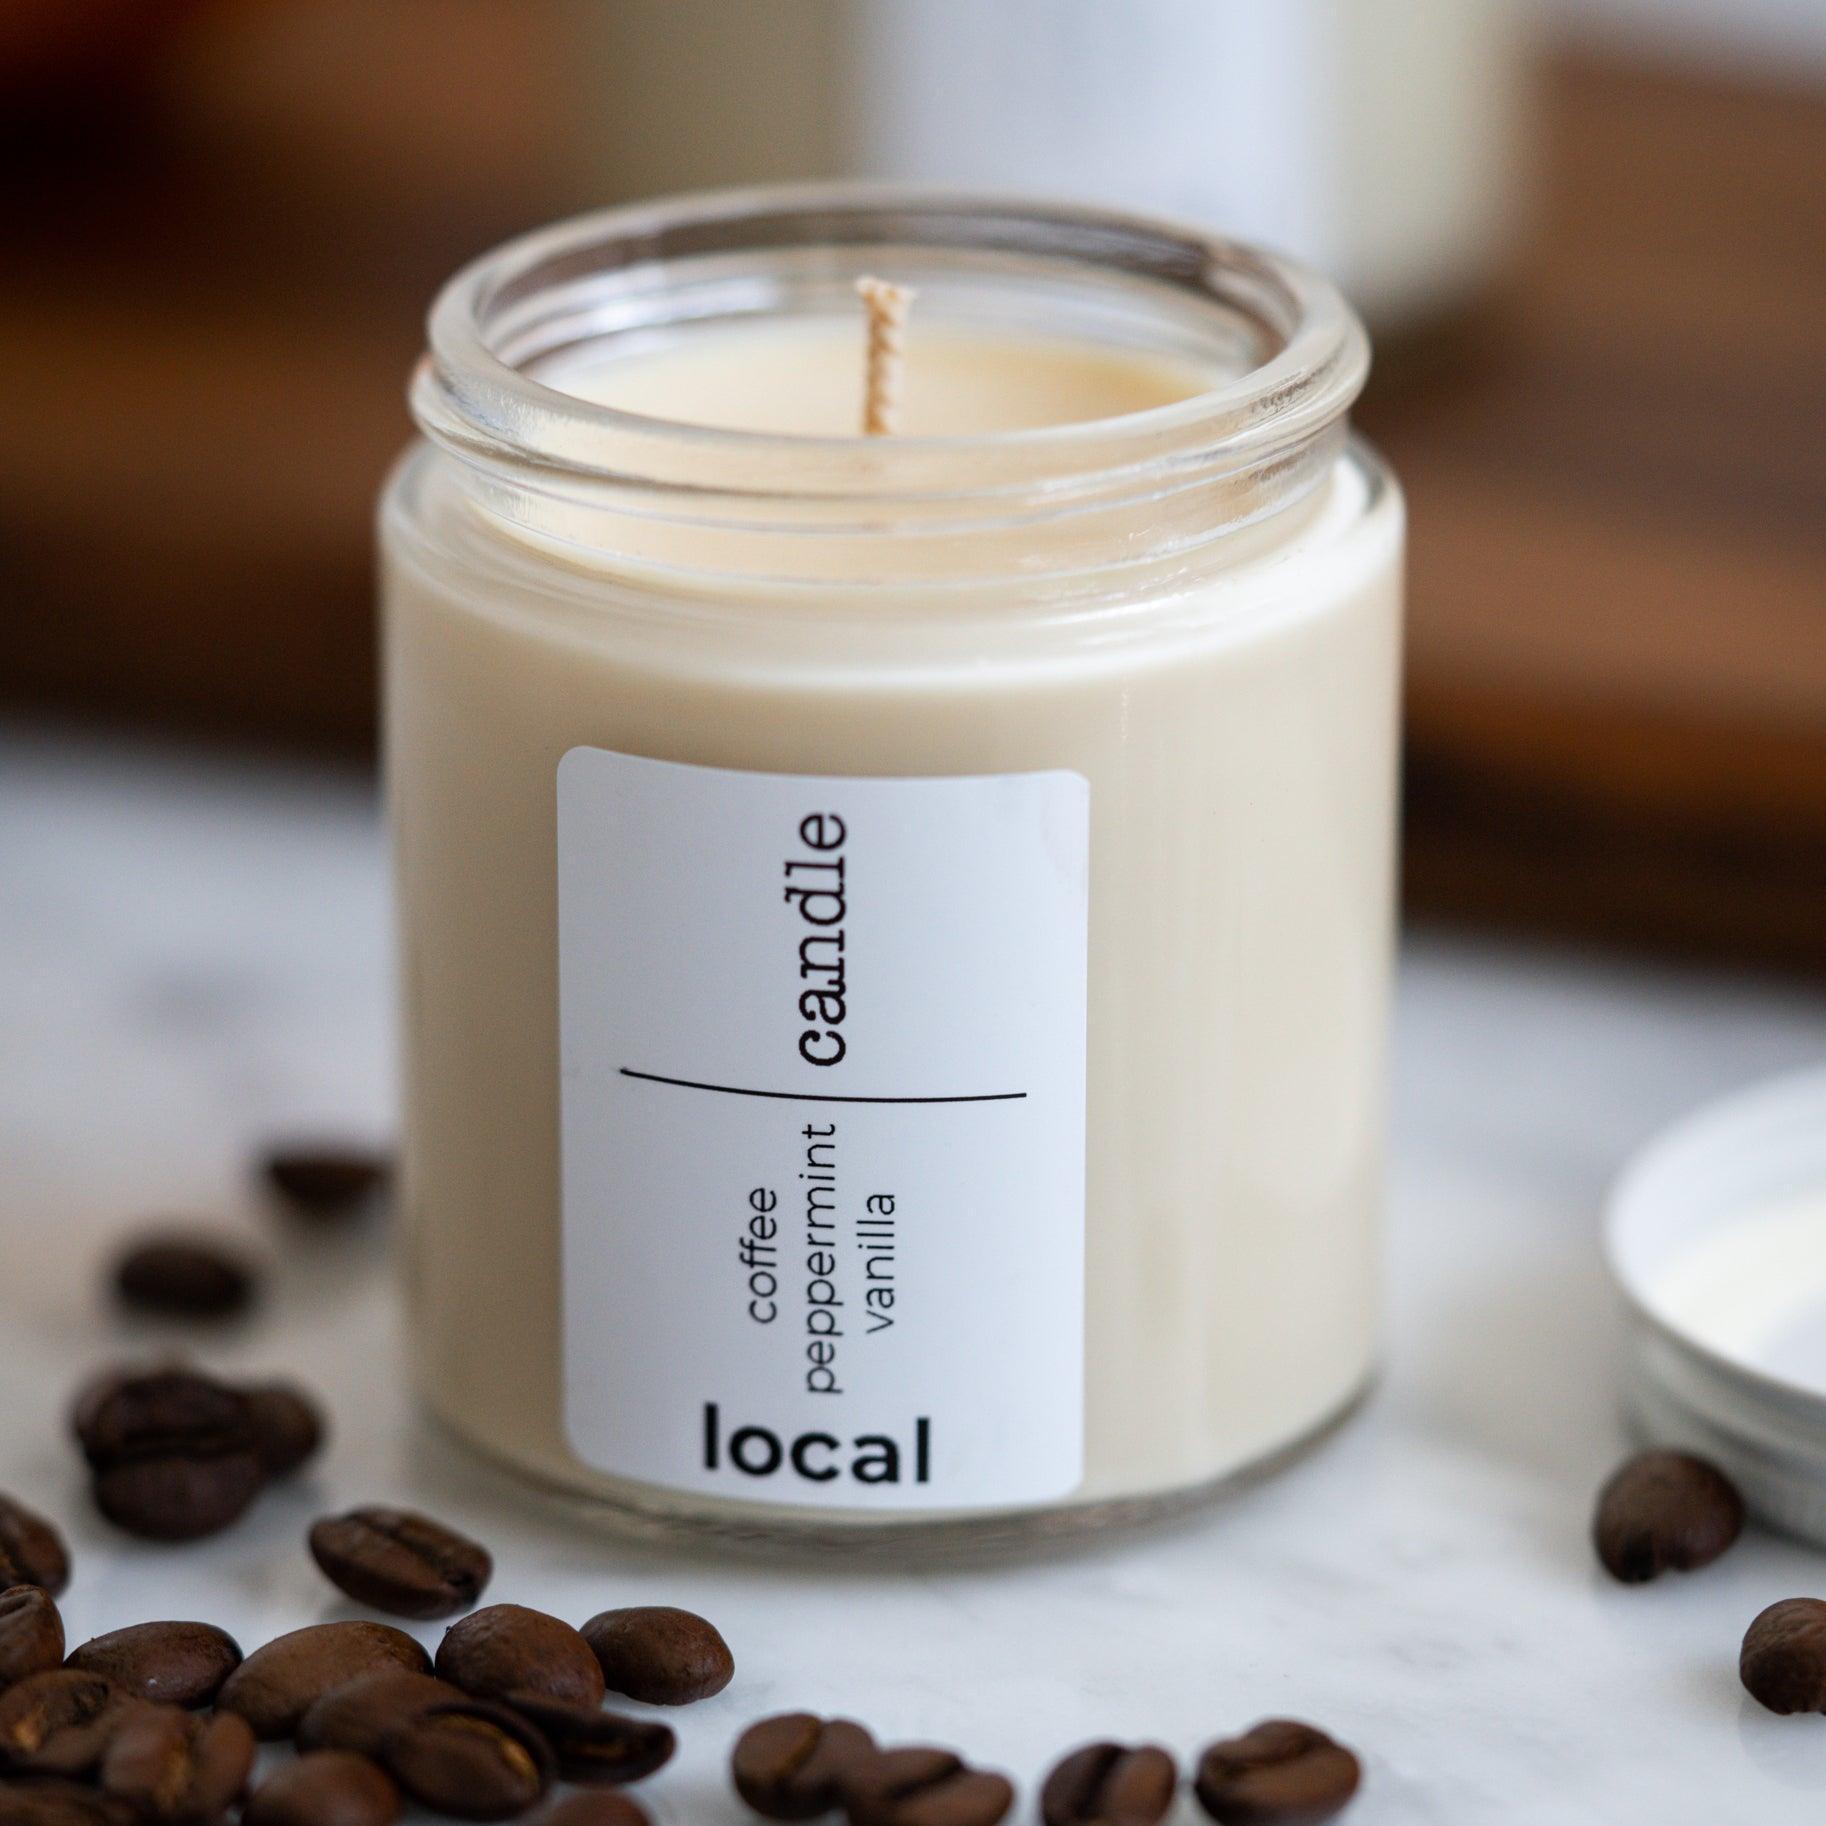 local candle - peppermint cinnamon vanilla - local - letsbelocal.ca